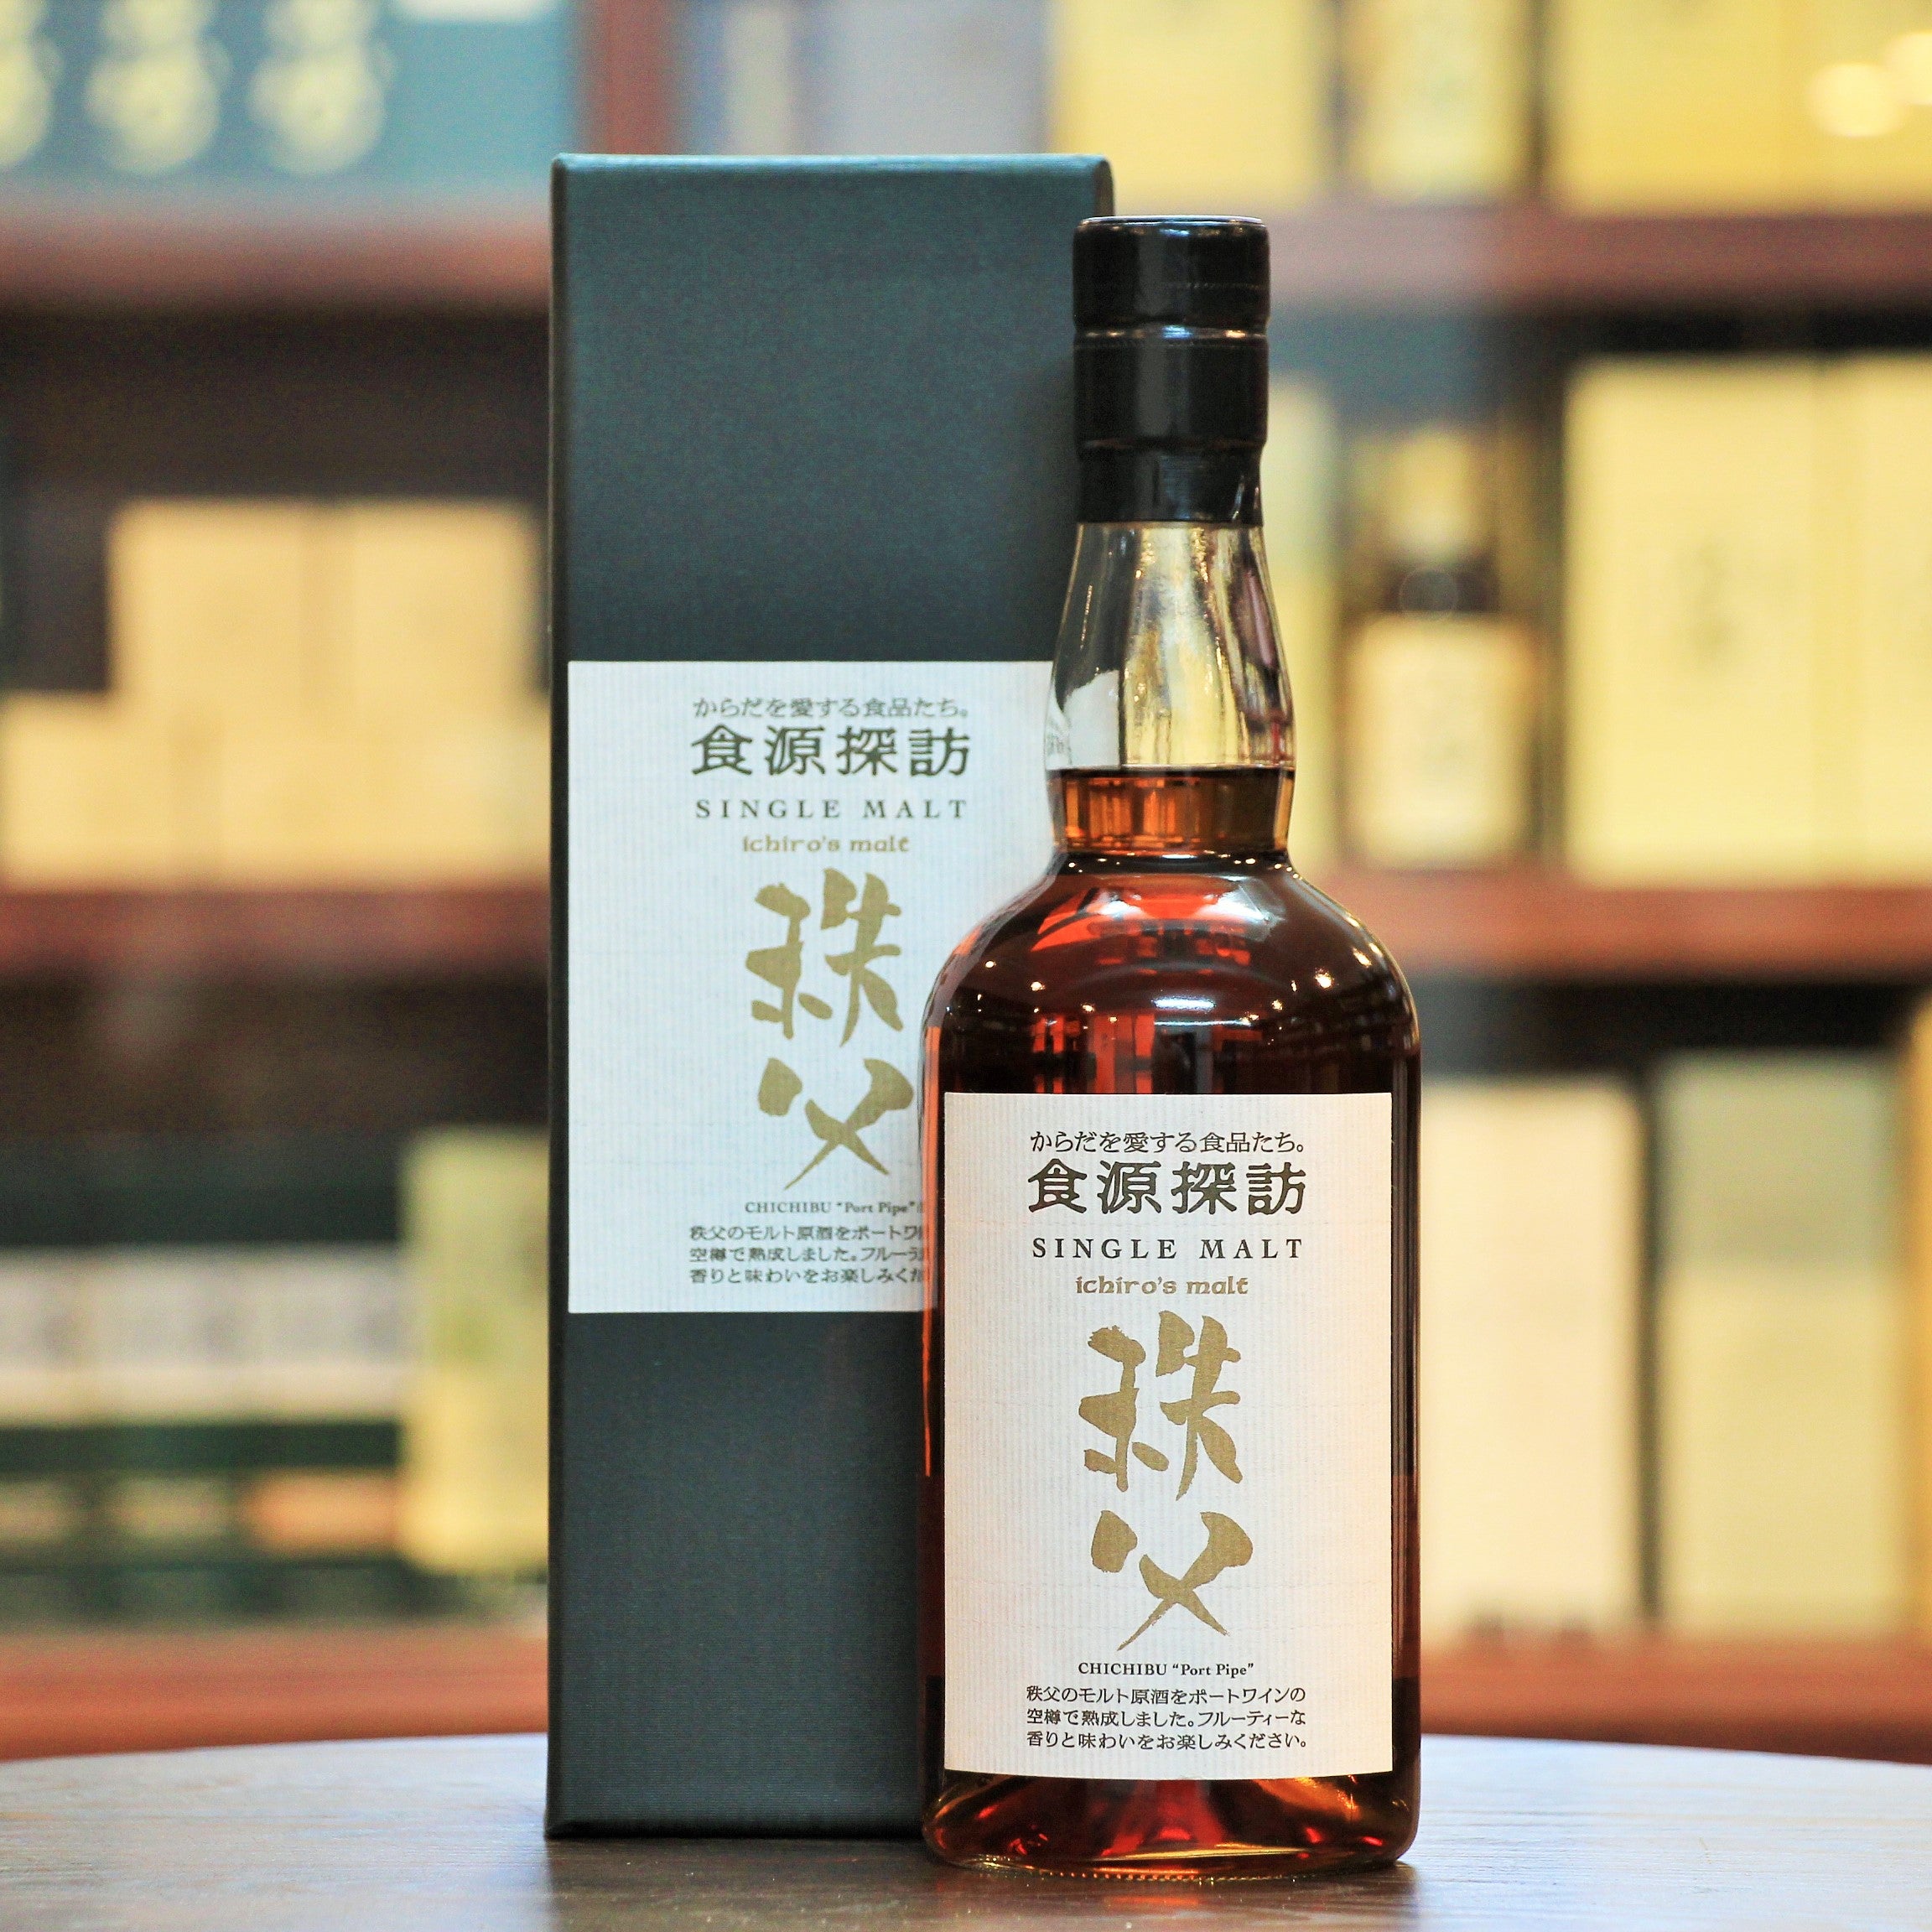 Ichiro's Malt Shokugen Tanbou 2015 Port Pipe Single Malt Whisky, A special release matured entirely in port pipe casks and bottled at cask strength.